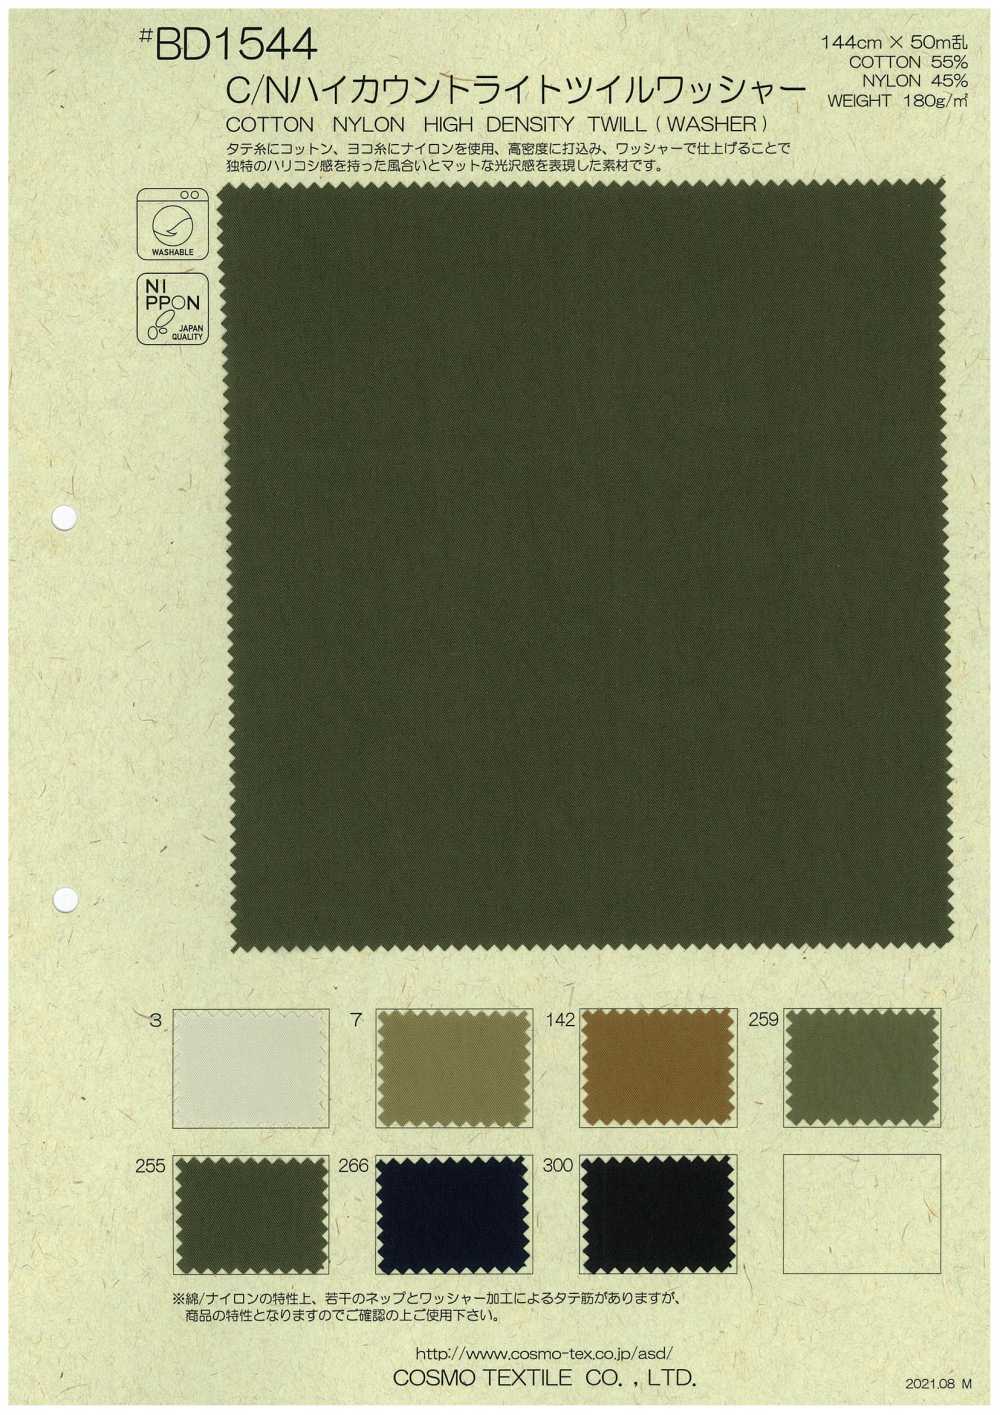 BD1544 C/Ny高支轻斜纹水洗加工[面料] Cosmo Textile 日本